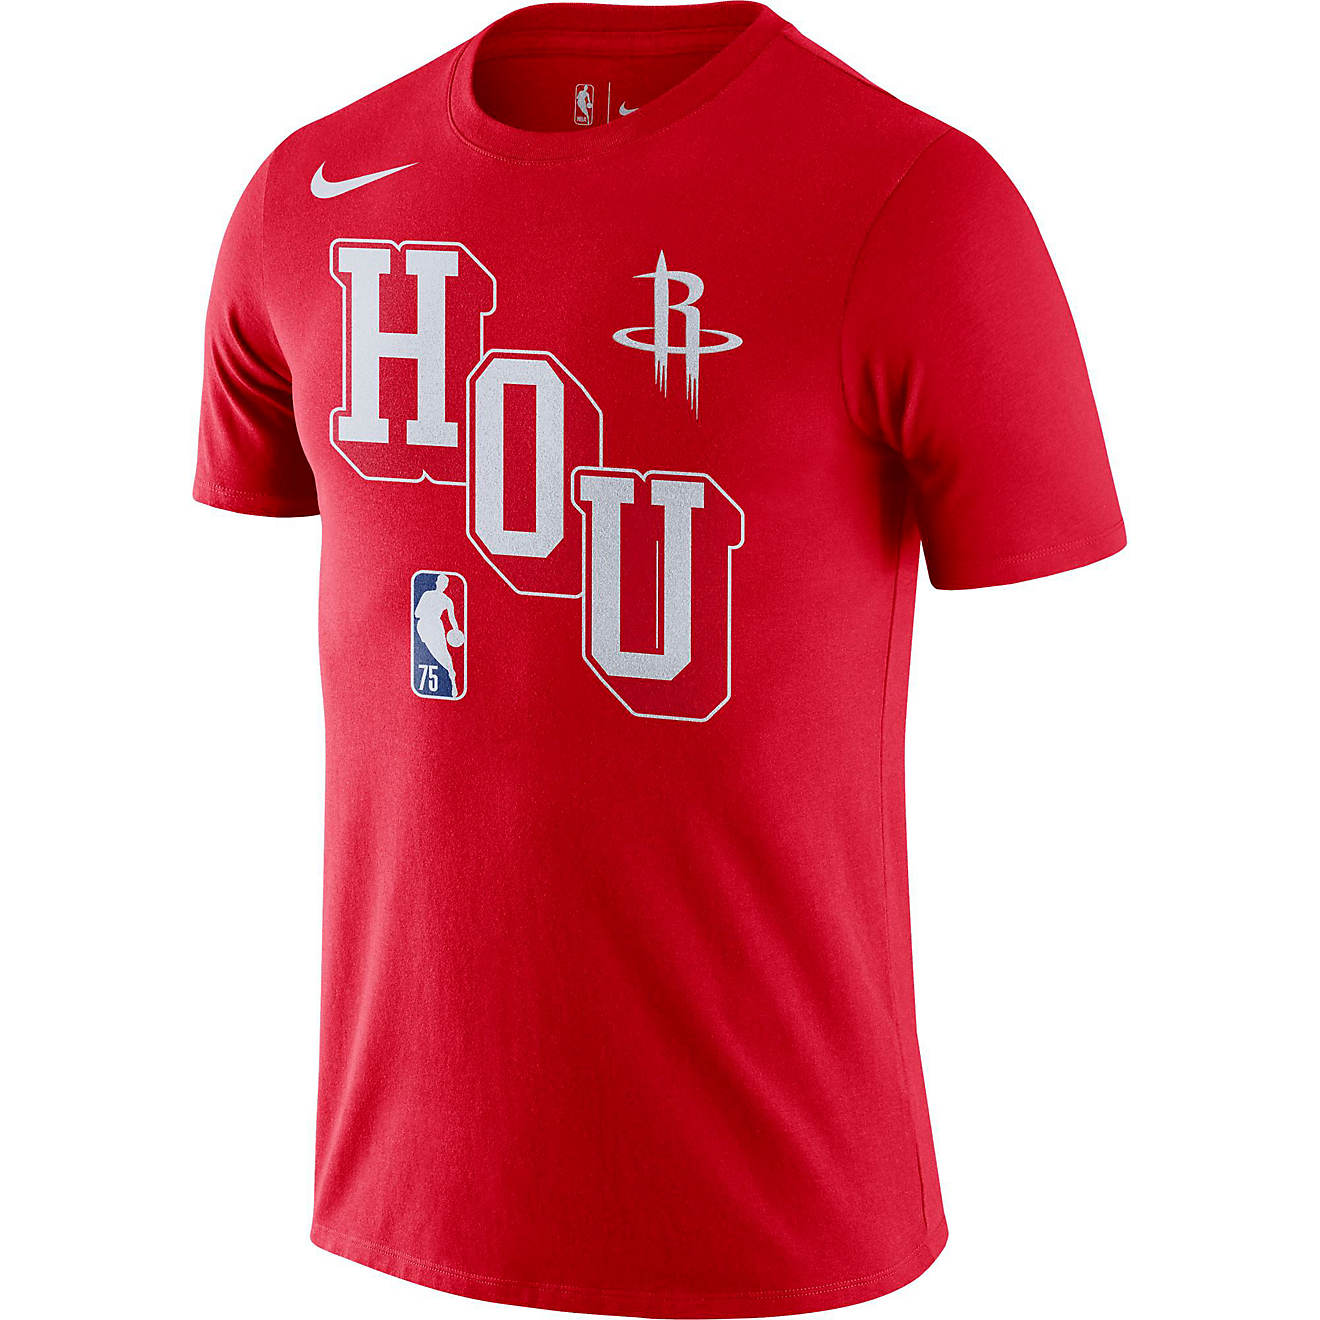 Nike Men's Houston Rockets Dri-FIT 3-D Graphic T-shirt                                                                           - view number 1